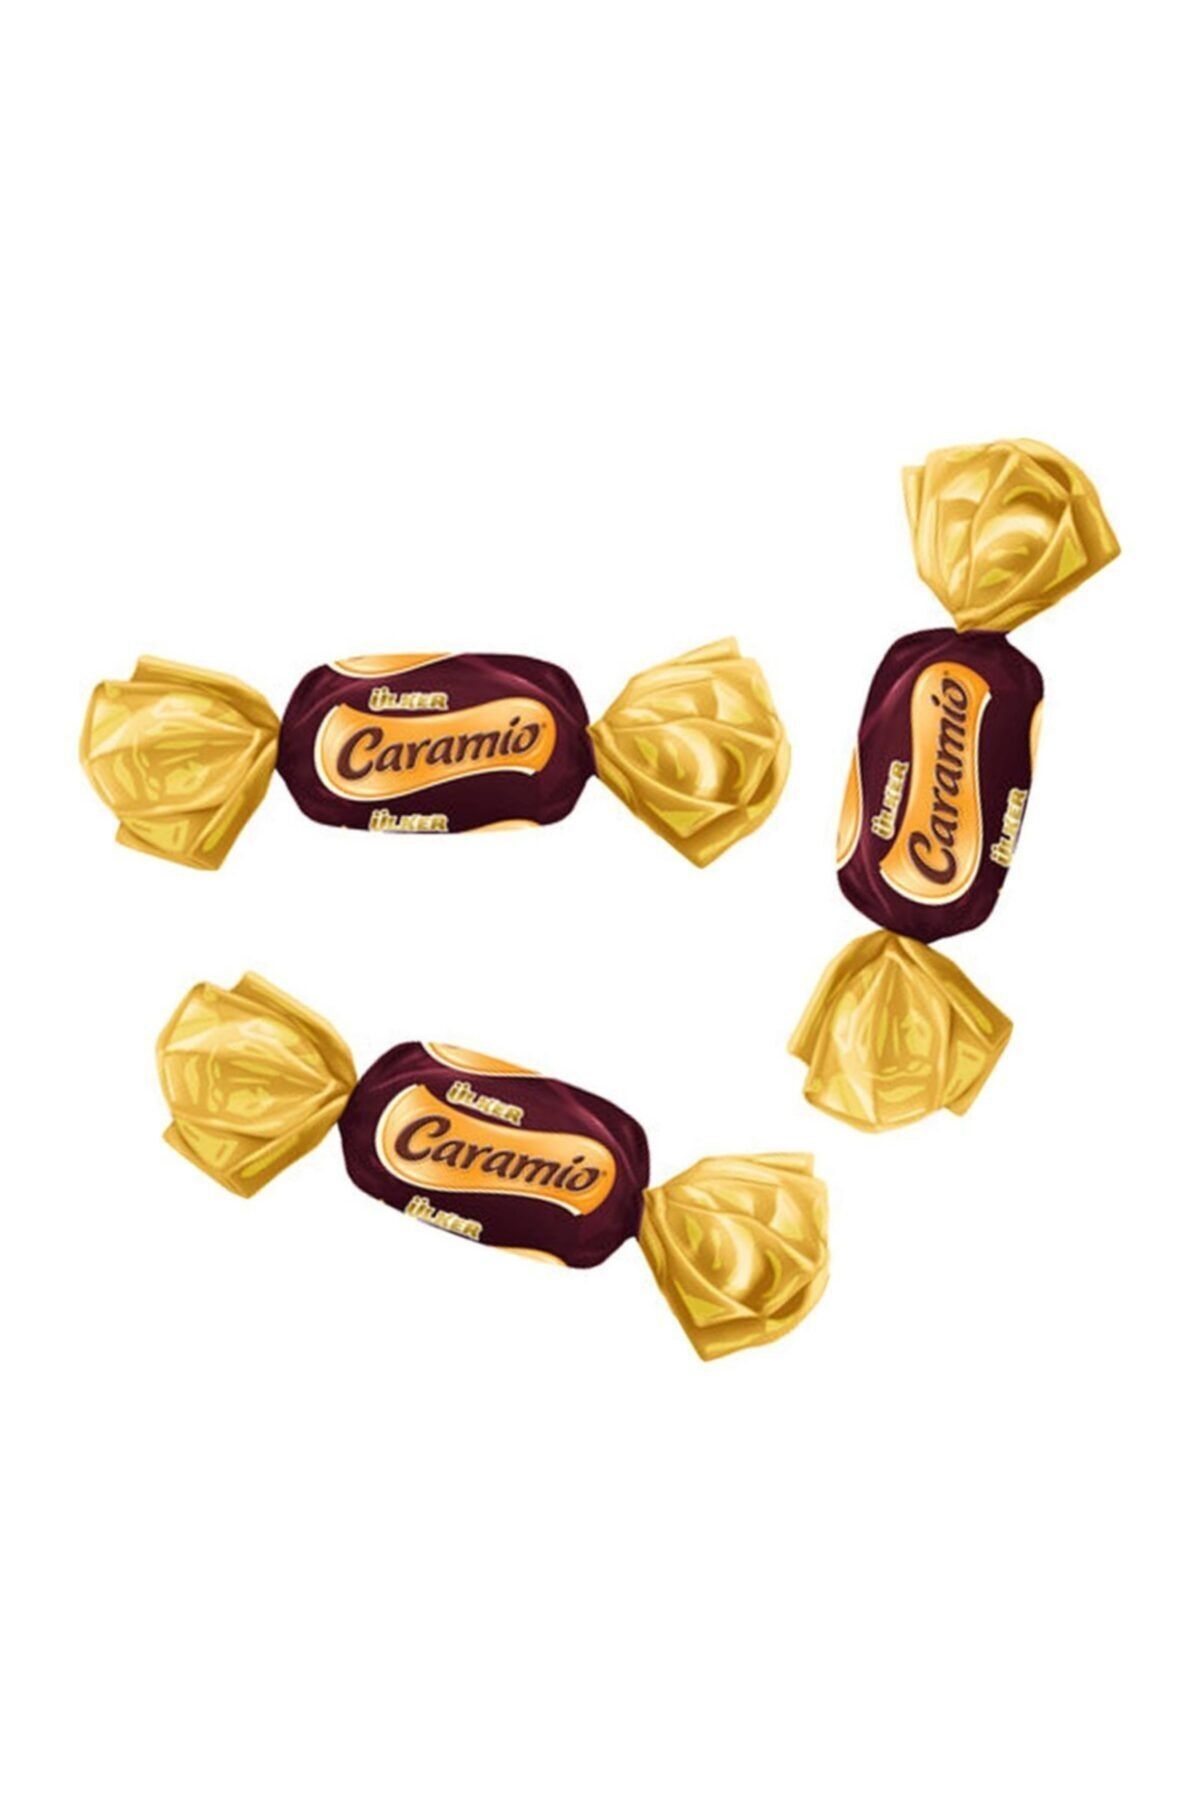 Ülker Caramio Mini Çikolata (250 GR)